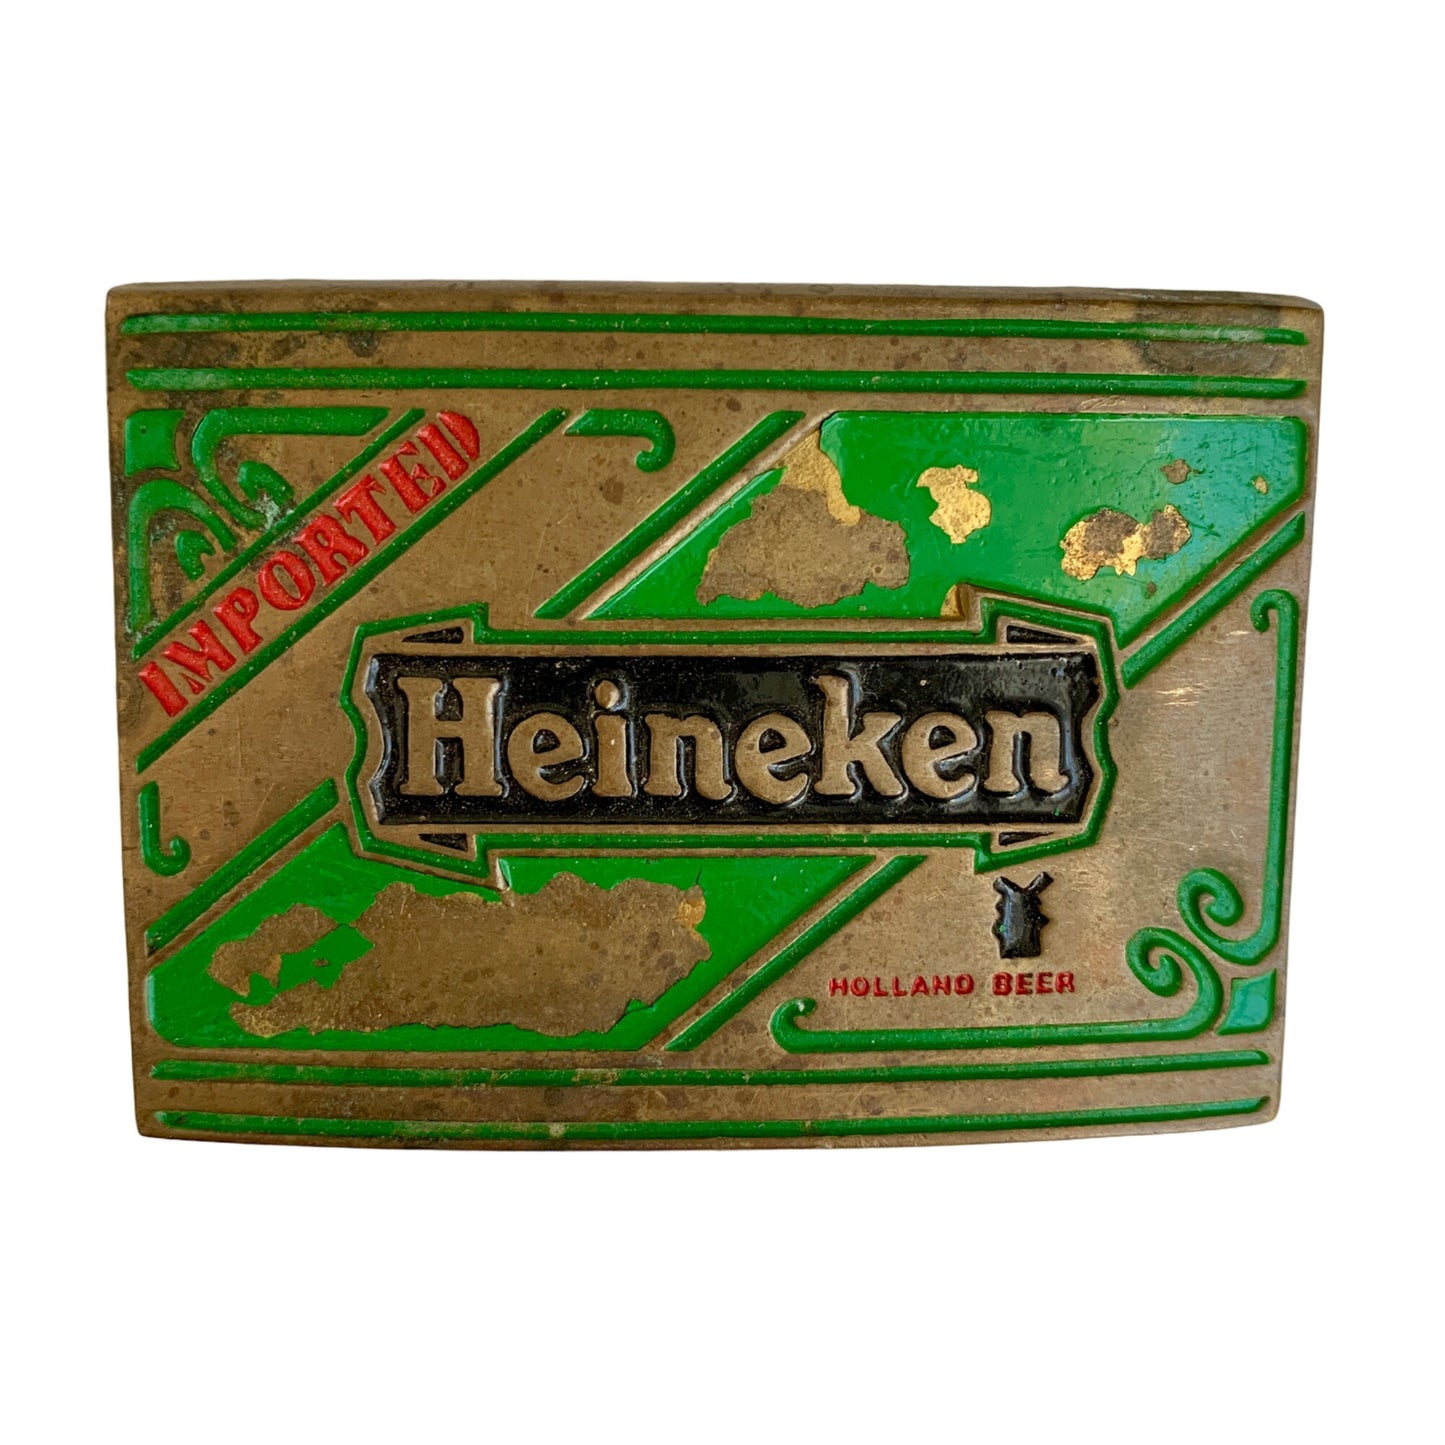 Heineken Imported Holland Beer Belt Buckle Vintage Baron Buckles 5988 Brass